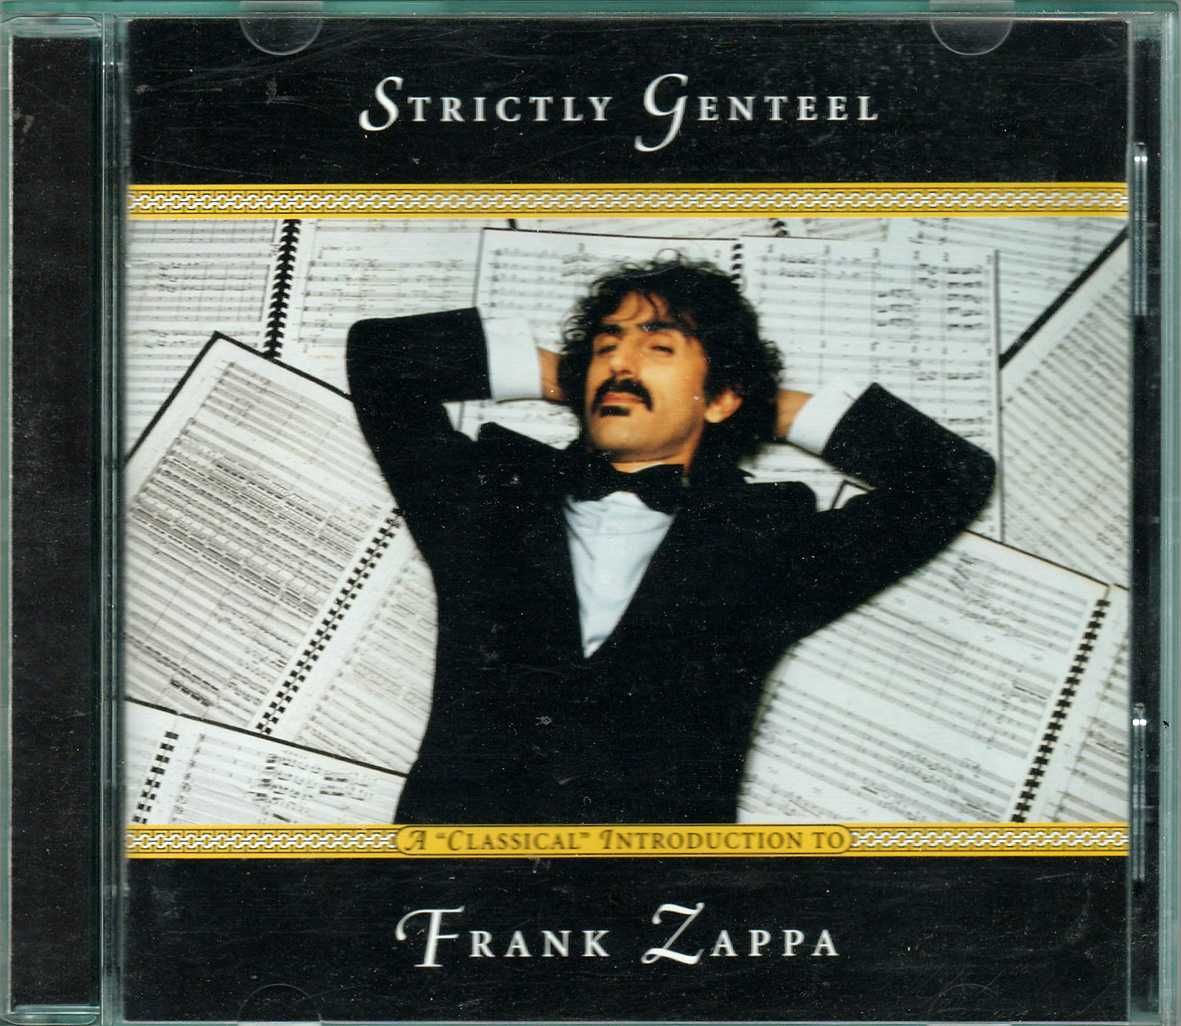 CD Frank Zappa - Strictly Genteel